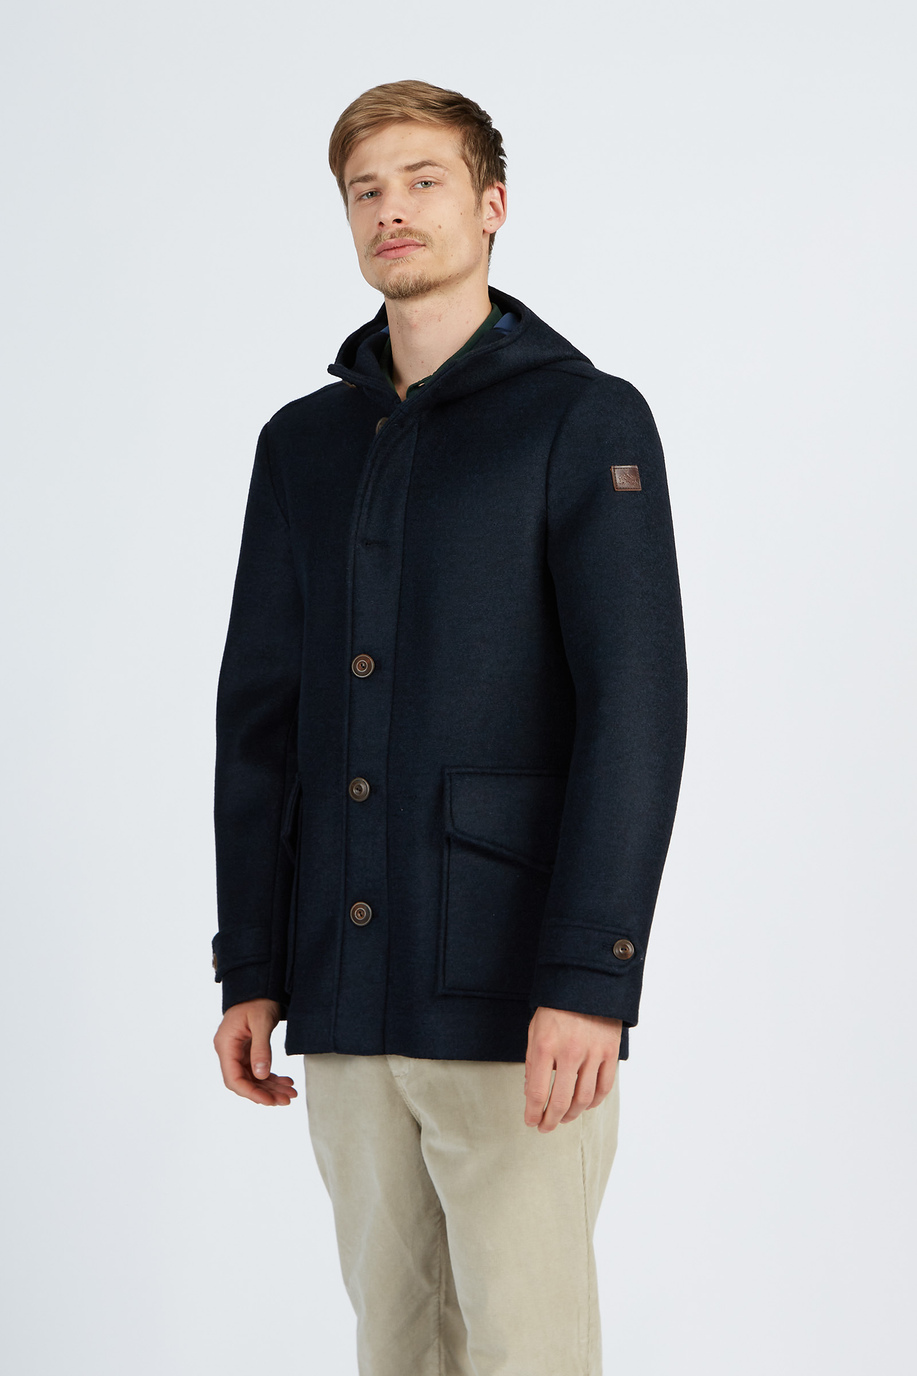 Leyendas Del Polo men’s wool blend jacket with buttons regular fit - Elegant looks for him | La Martina - Official Online Shop